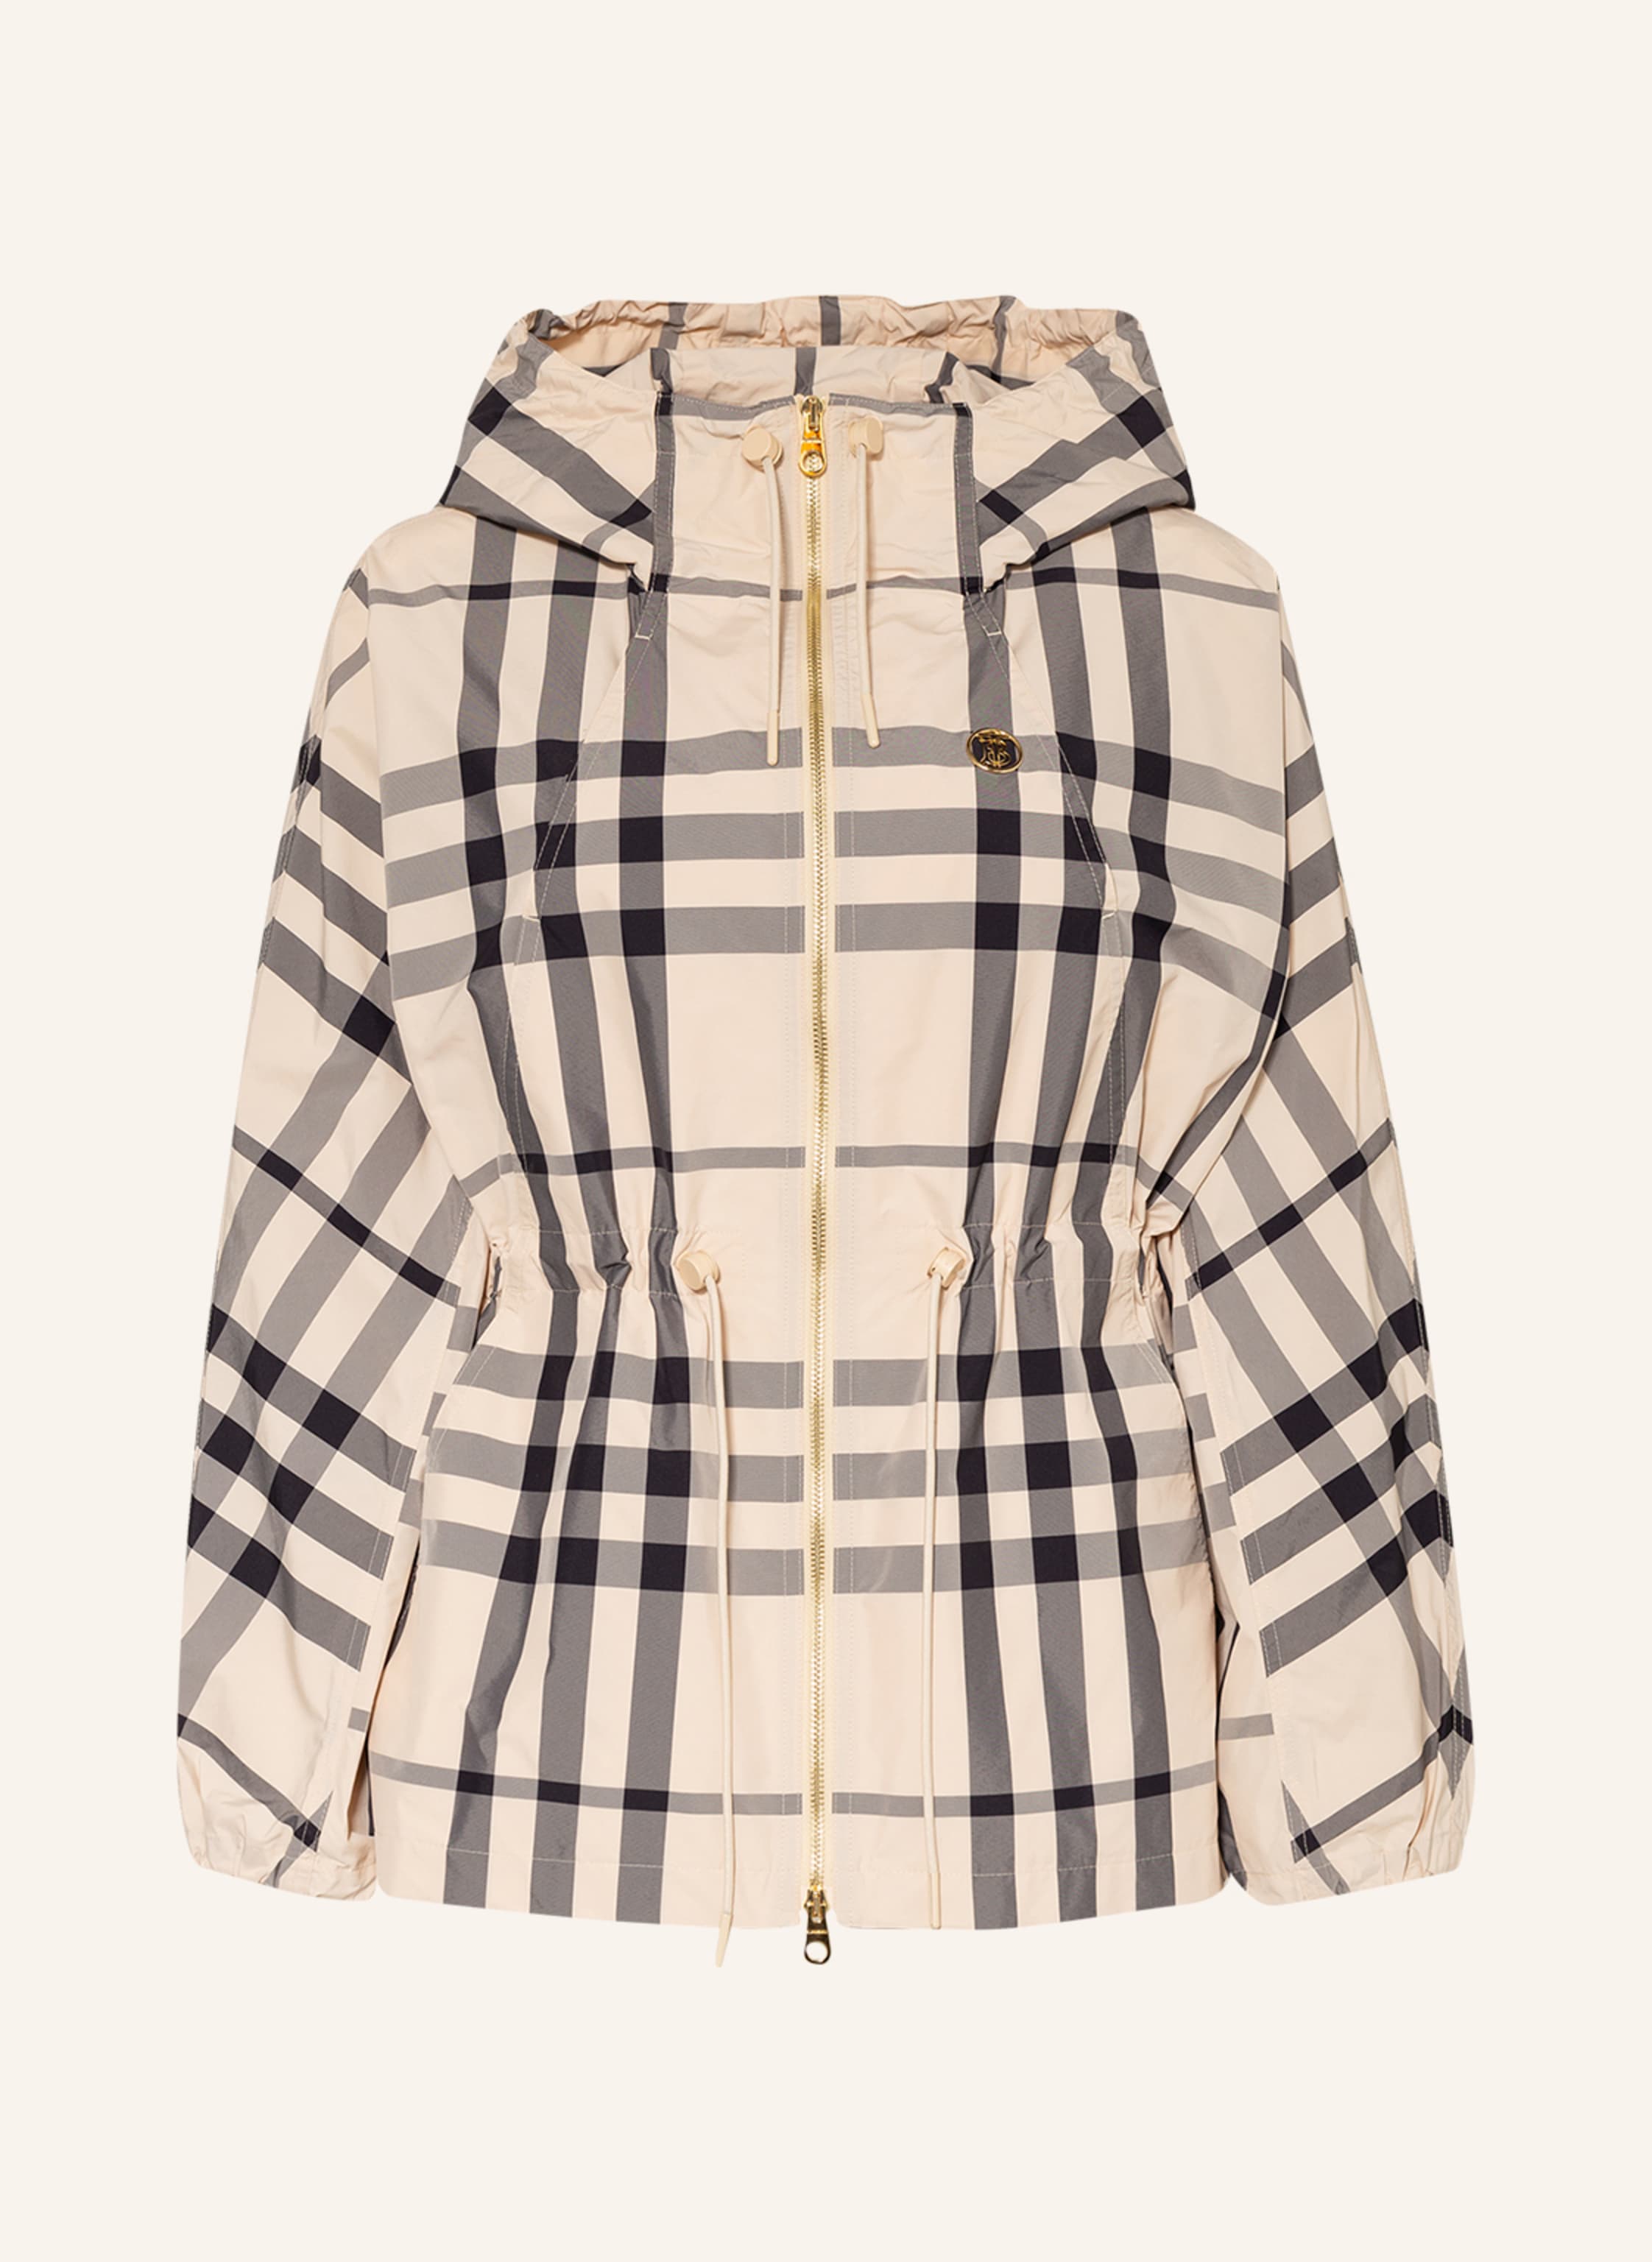 BURBERRY Rain jacket EMYLCHK in cream/ gray/ dark gray | Breuninger